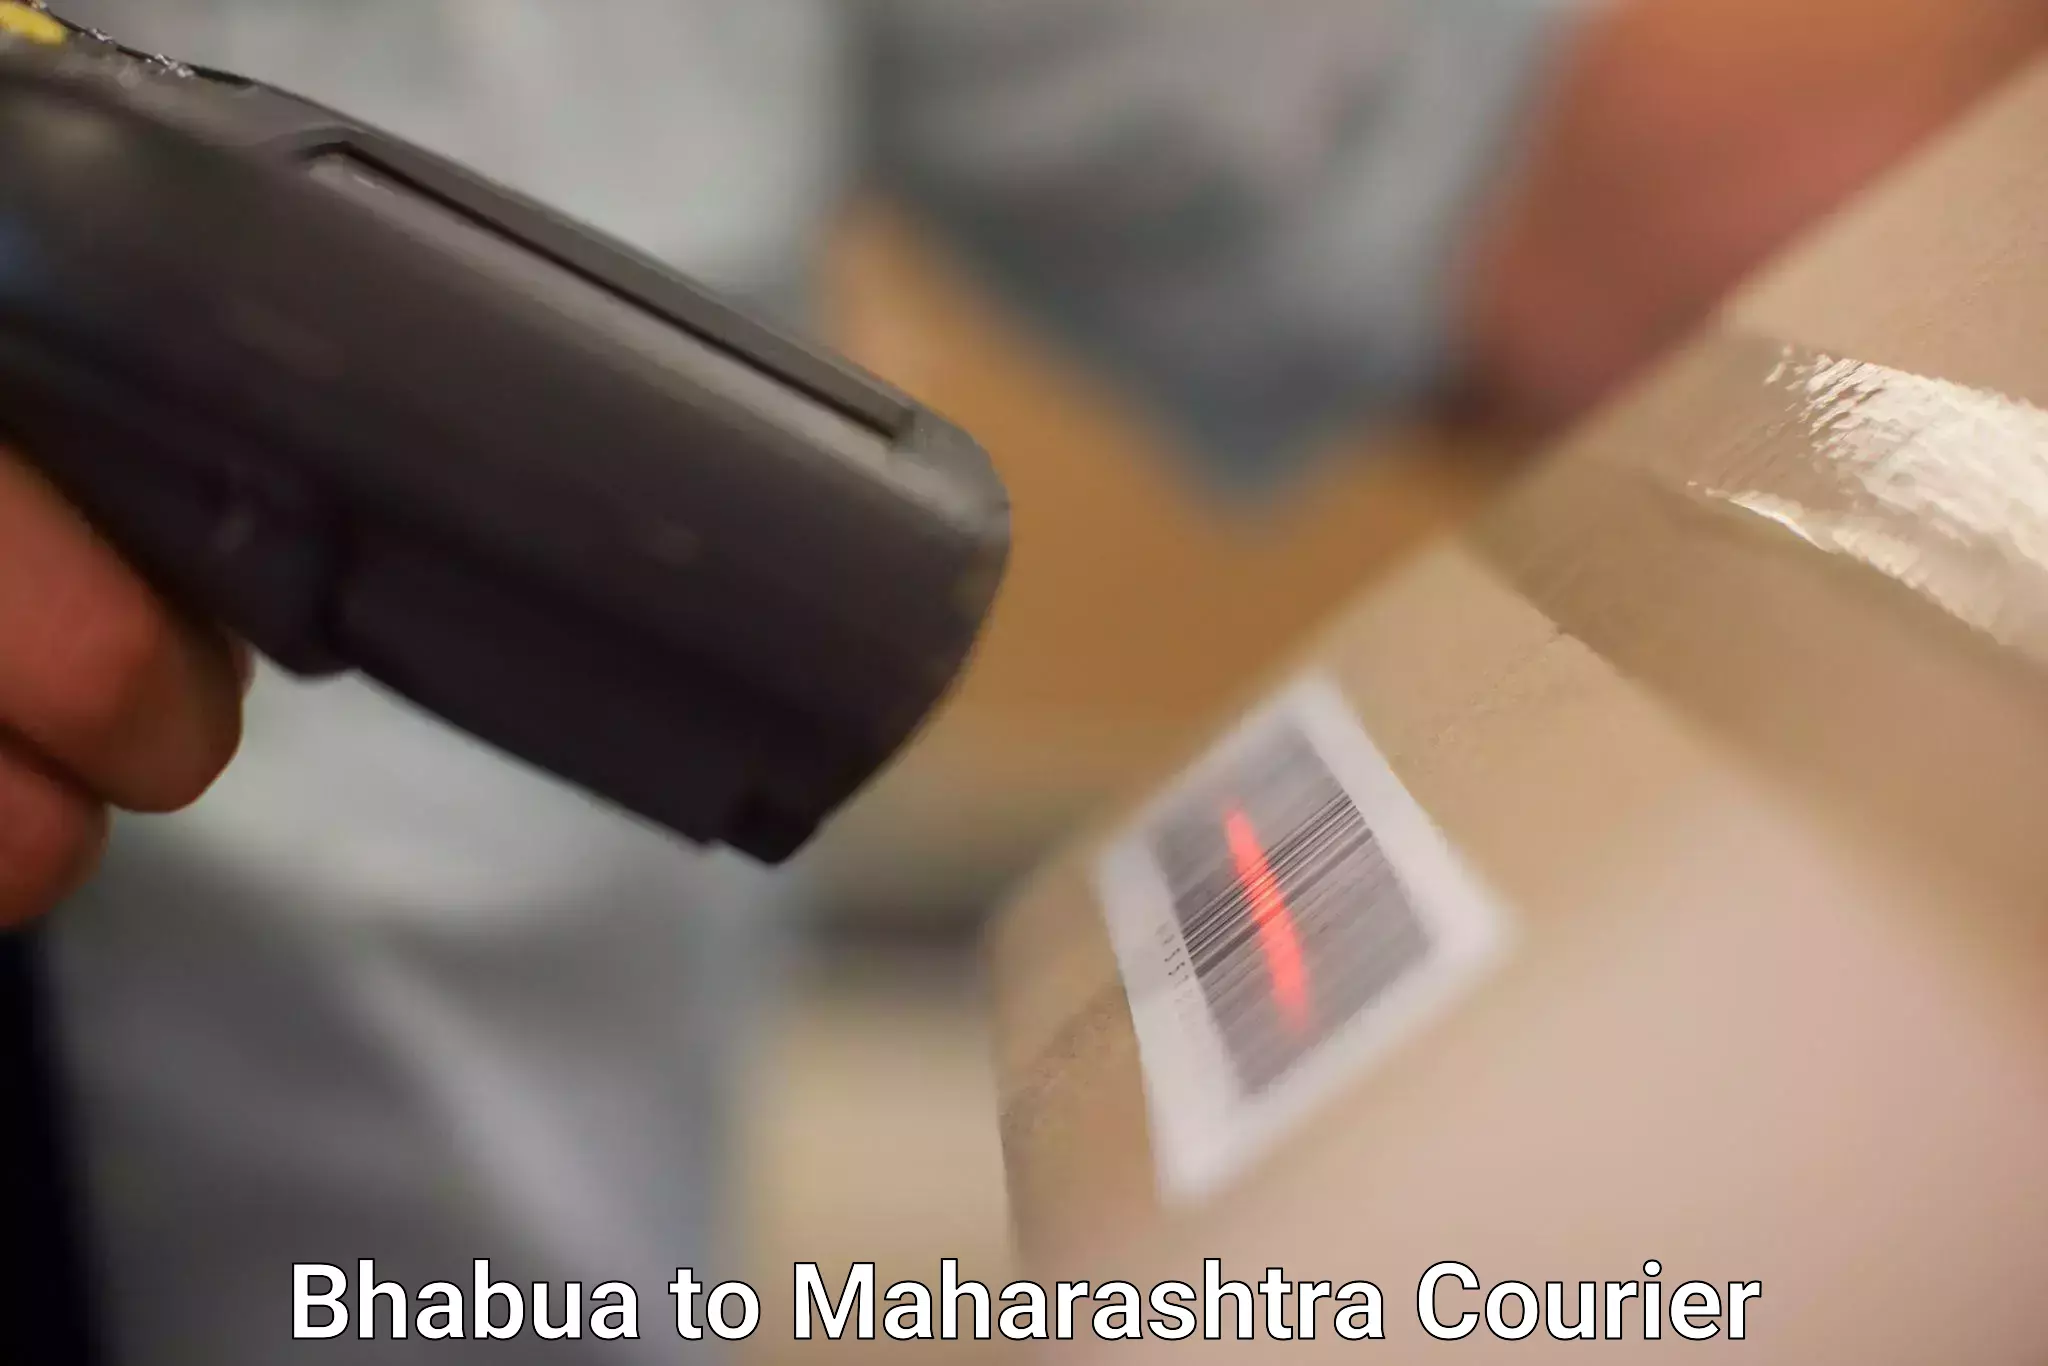 Courier service comparison Bhabua to Mumbai Port